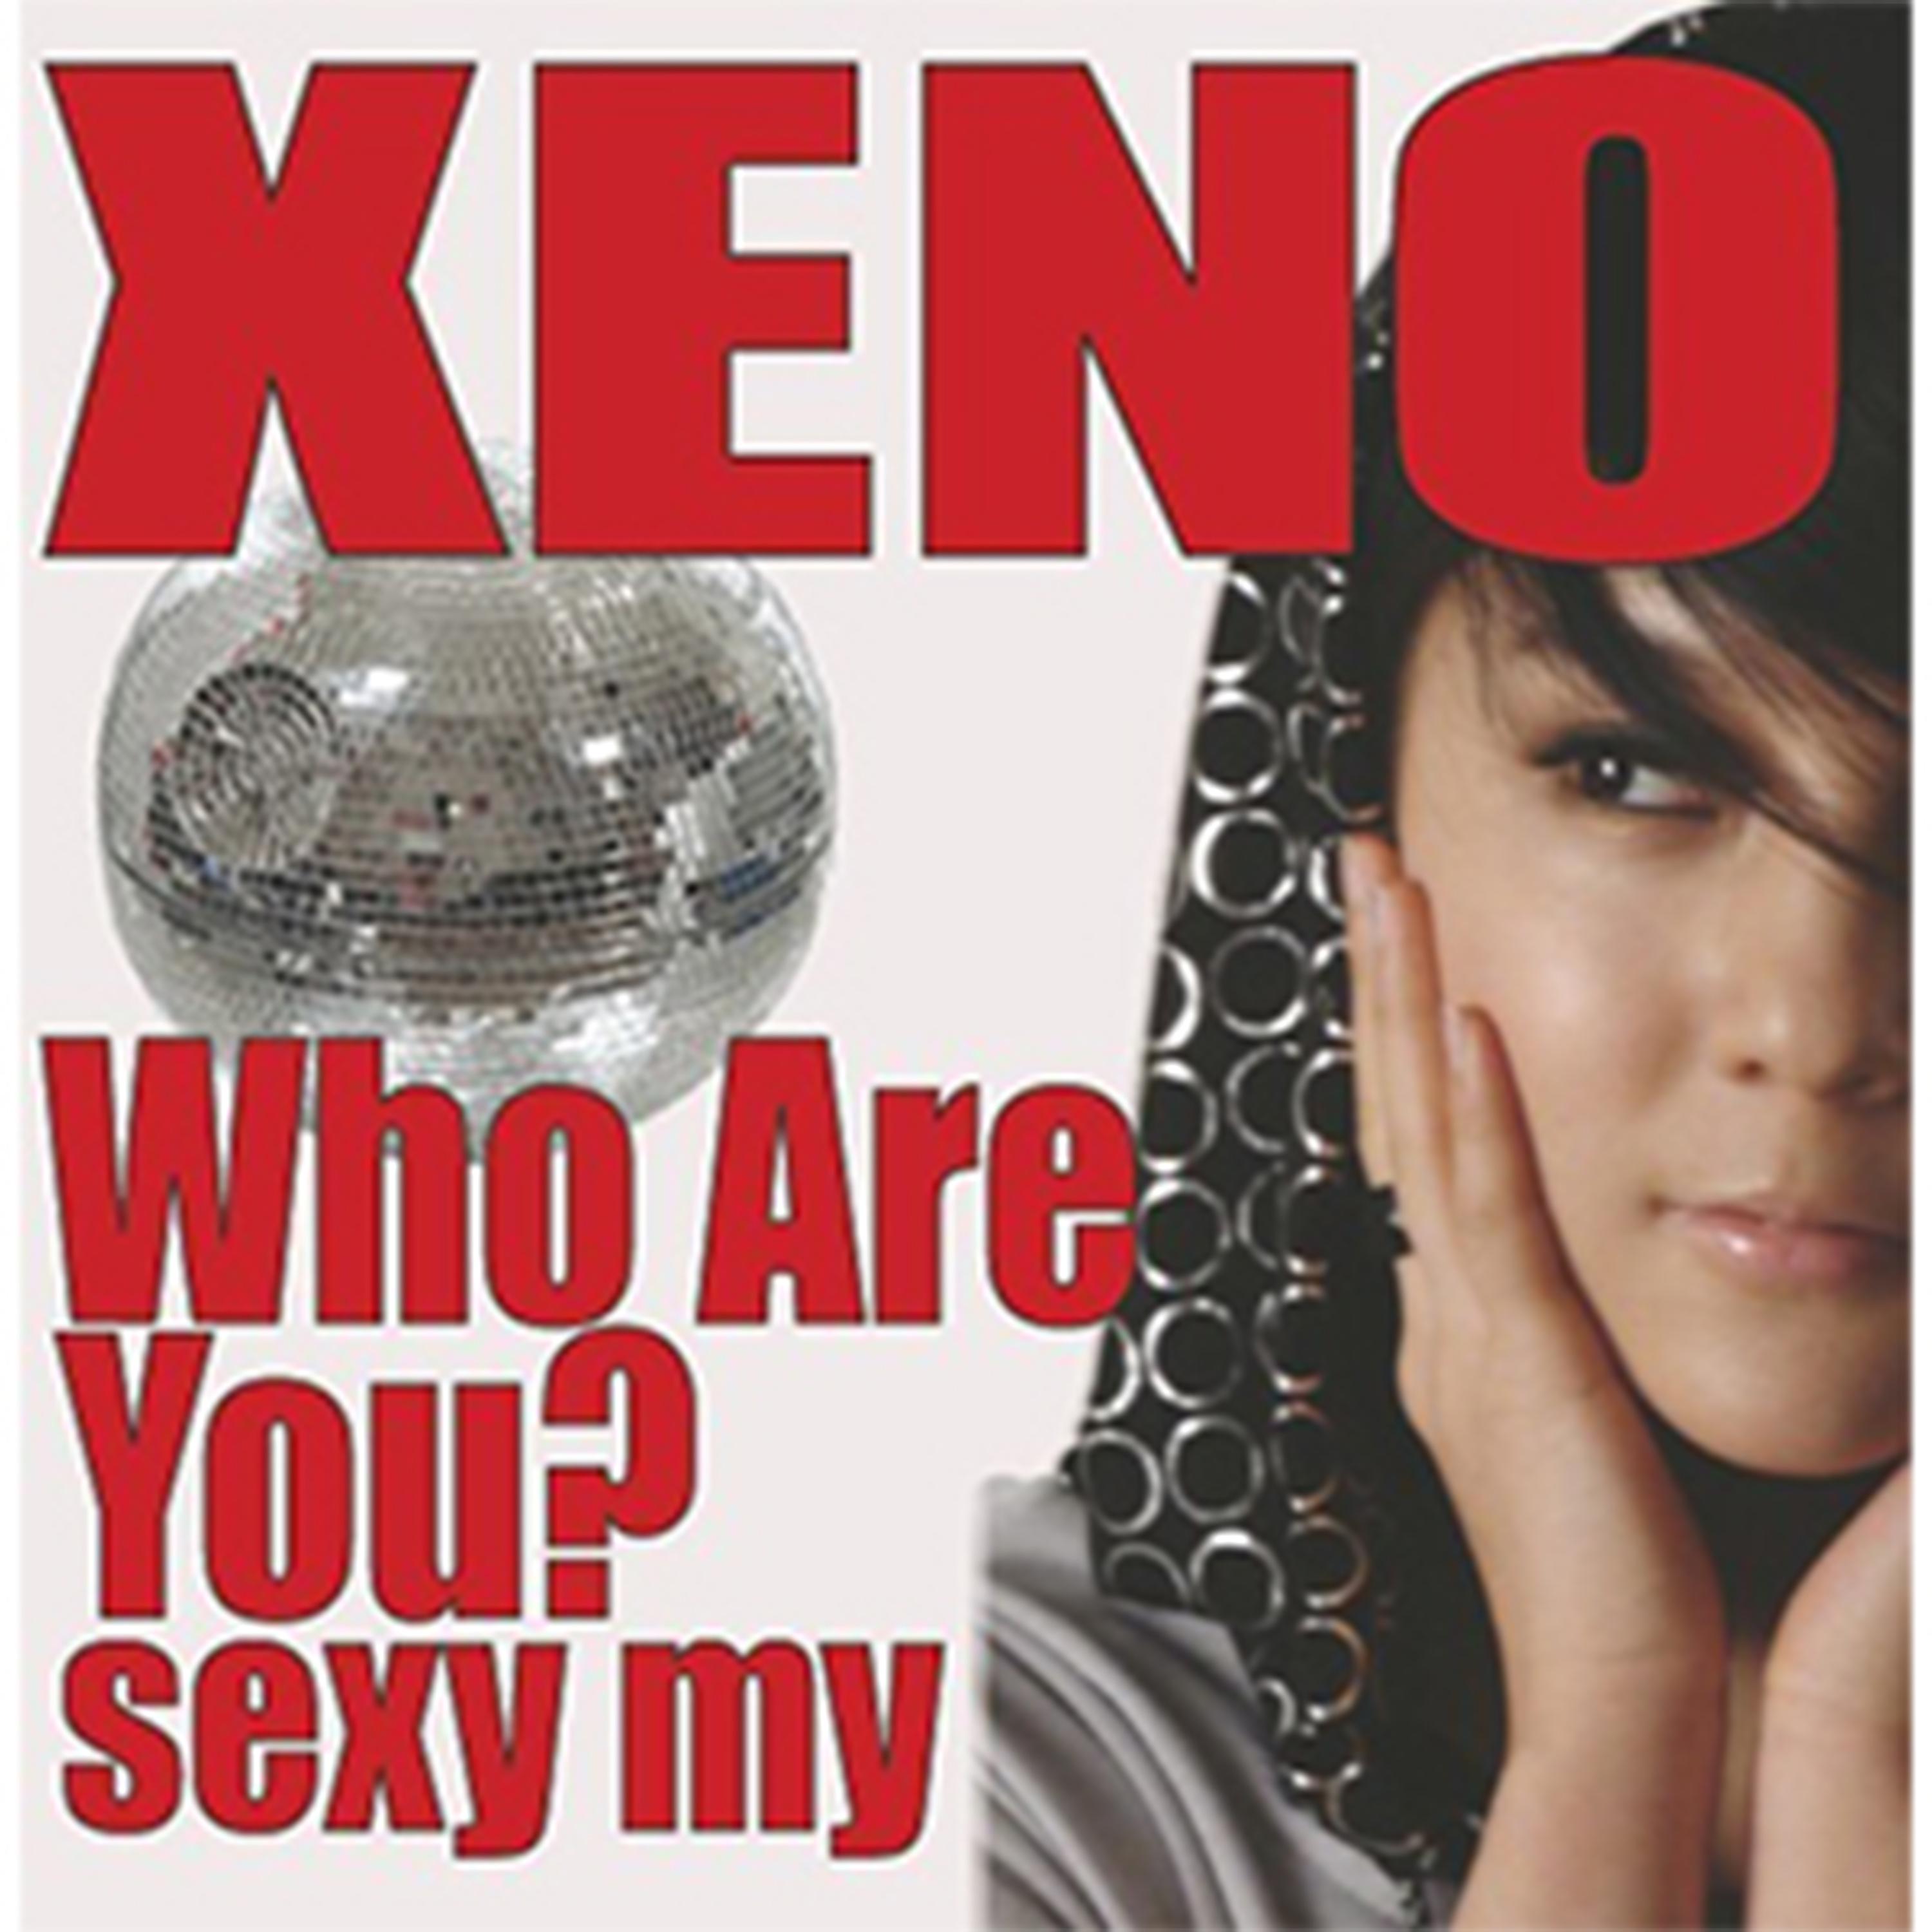 XENO - Who Are You? **** My Boy!